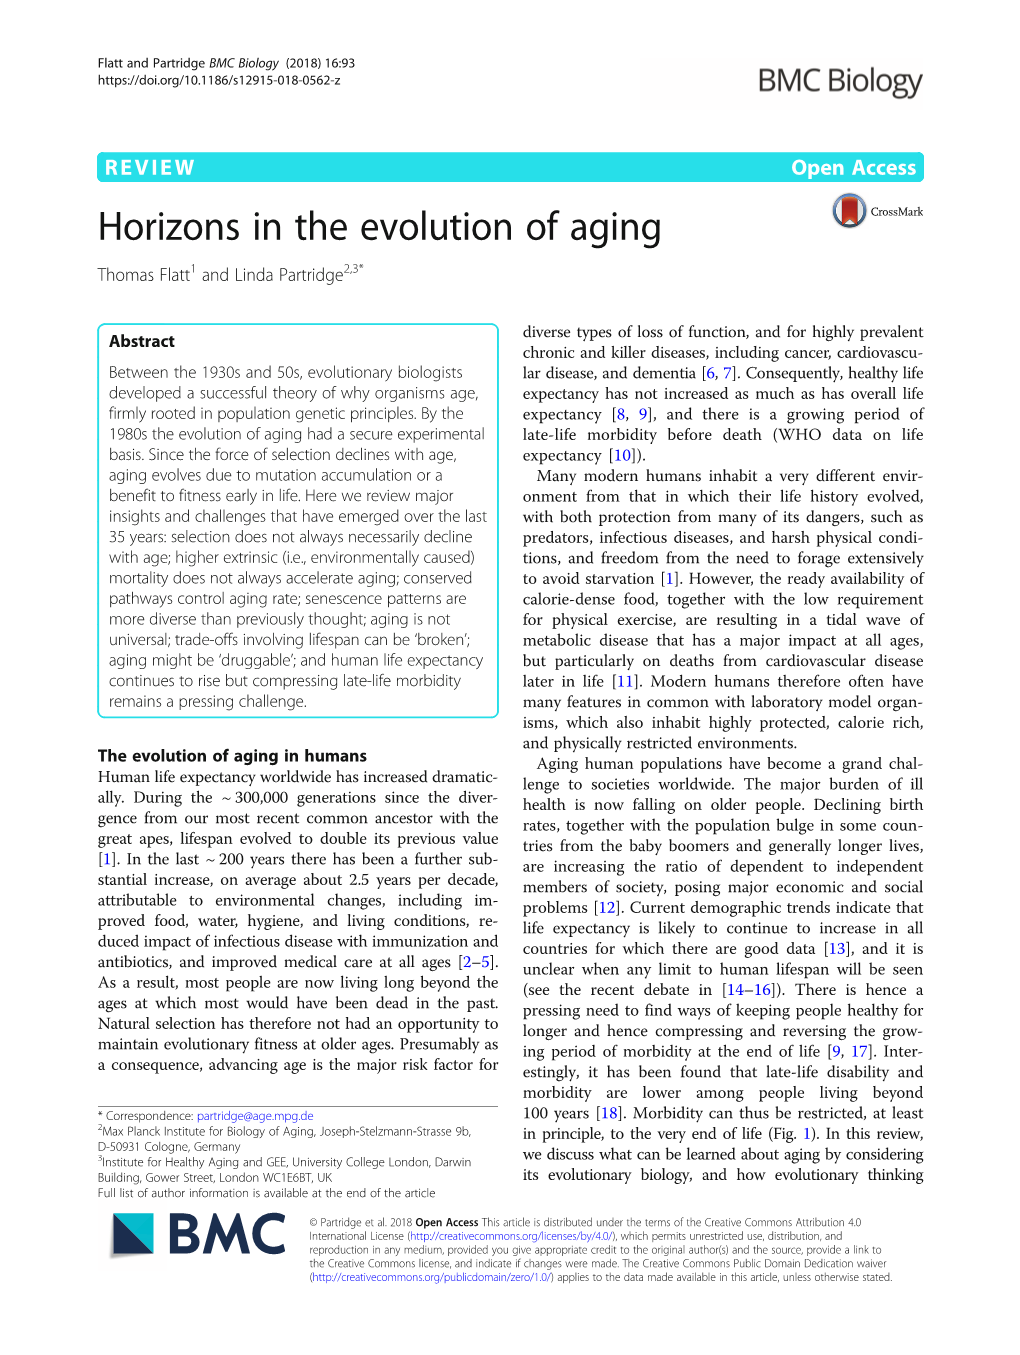 Horizons in the Evolution of Aging Thomas Flatt1 and Linda Partridge2,3*